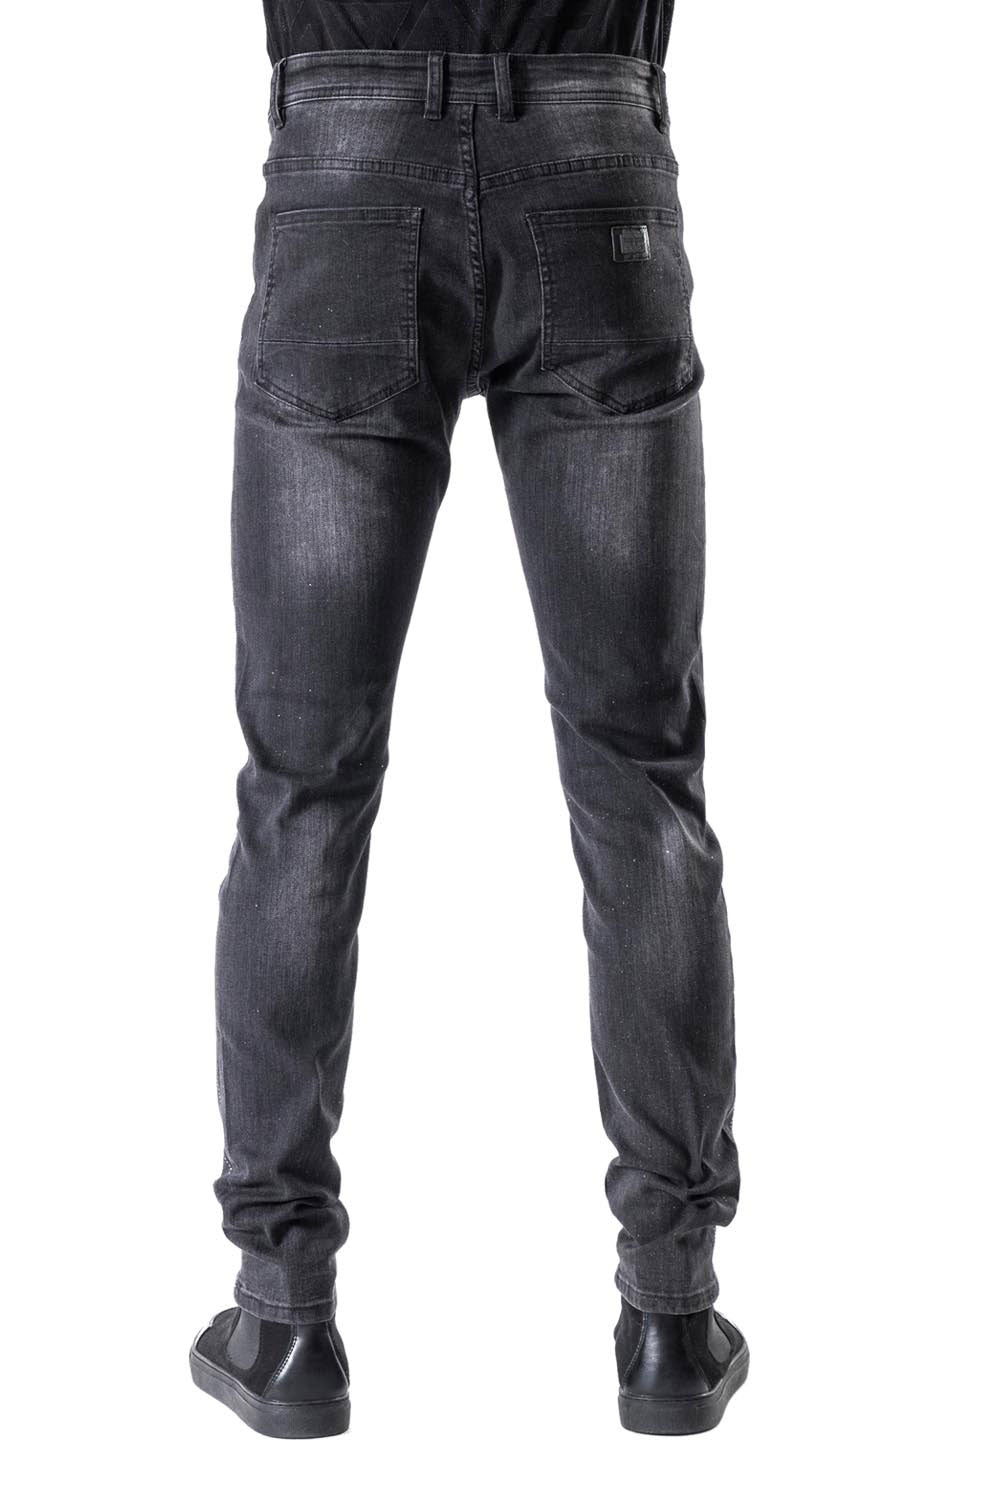 BARABAS Men's Rhinestone Slim Fit Black Denim Jeans SN8886-1